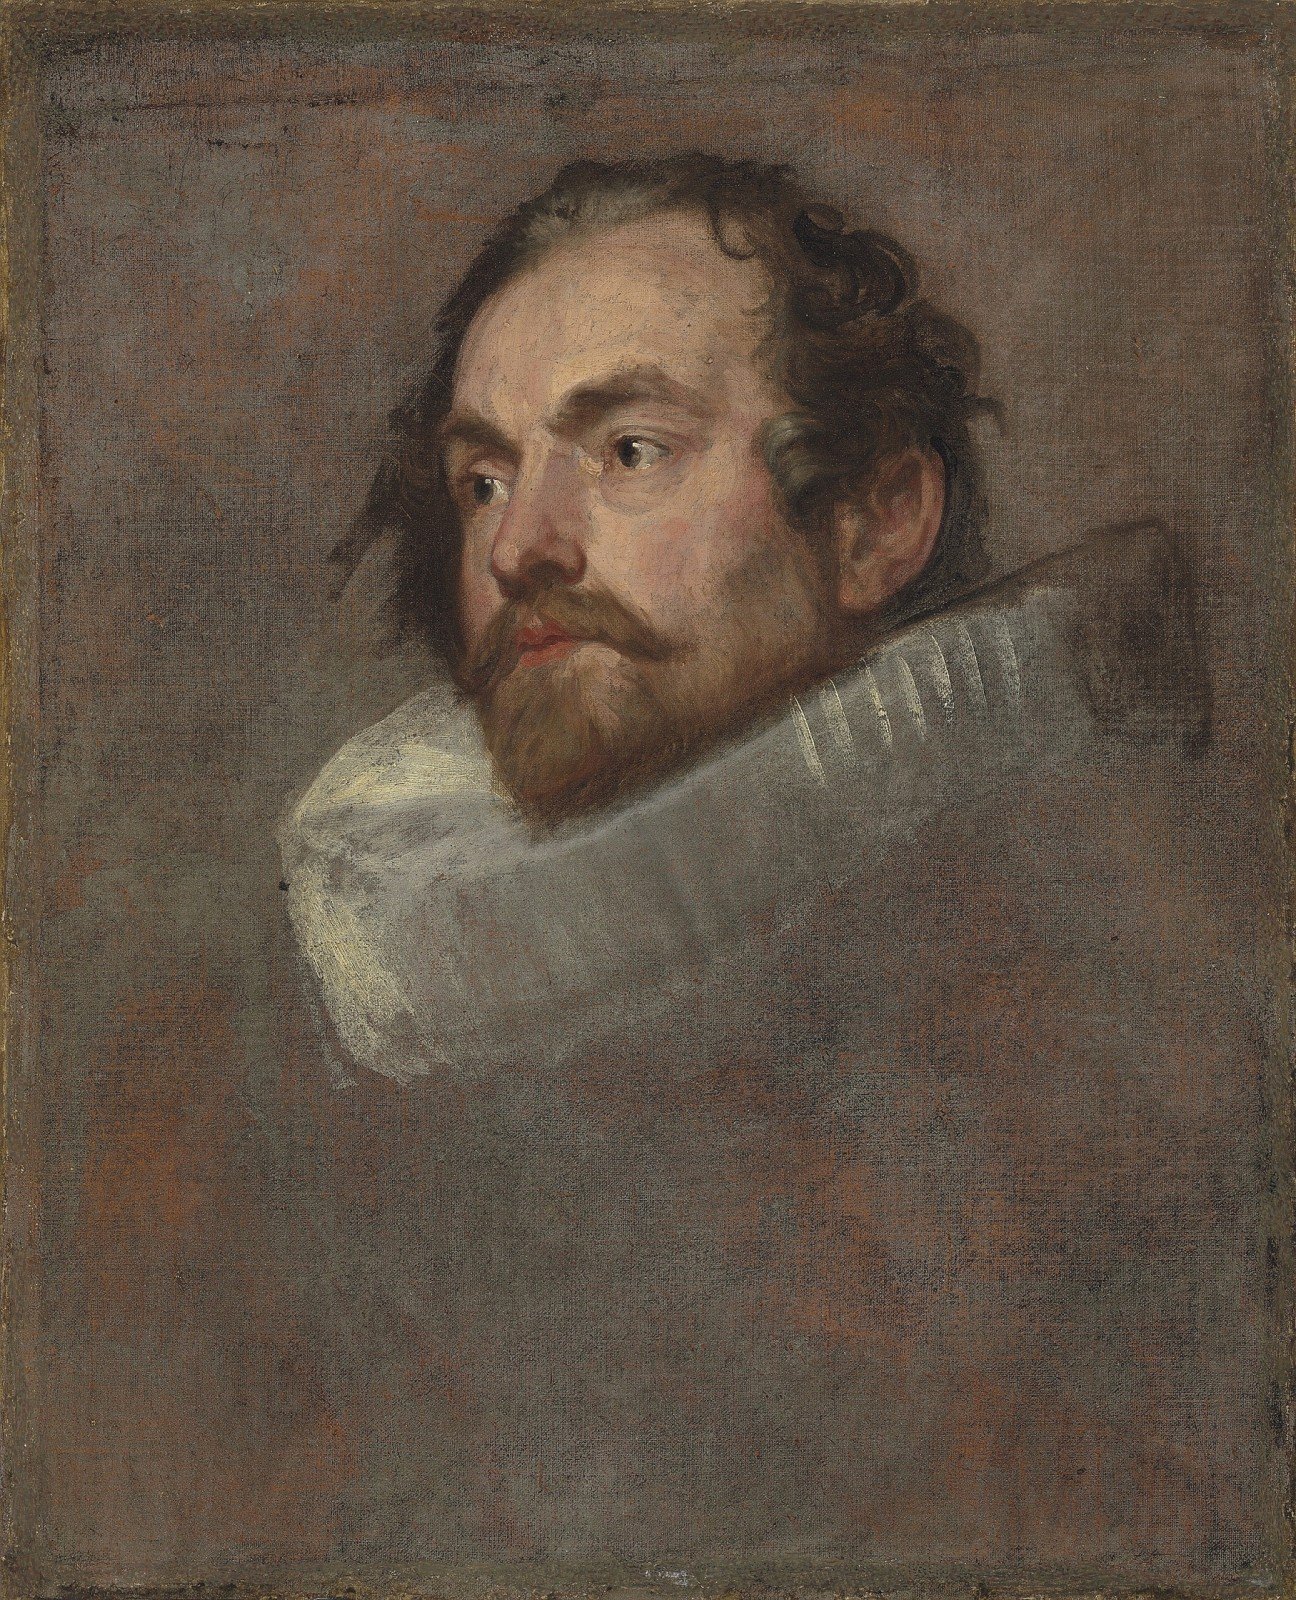 Sir Anthony van Dyck (1599-1641), “Head study of a man in a ruff”, oil on canvas, (55.3 x 45.1 cm.)